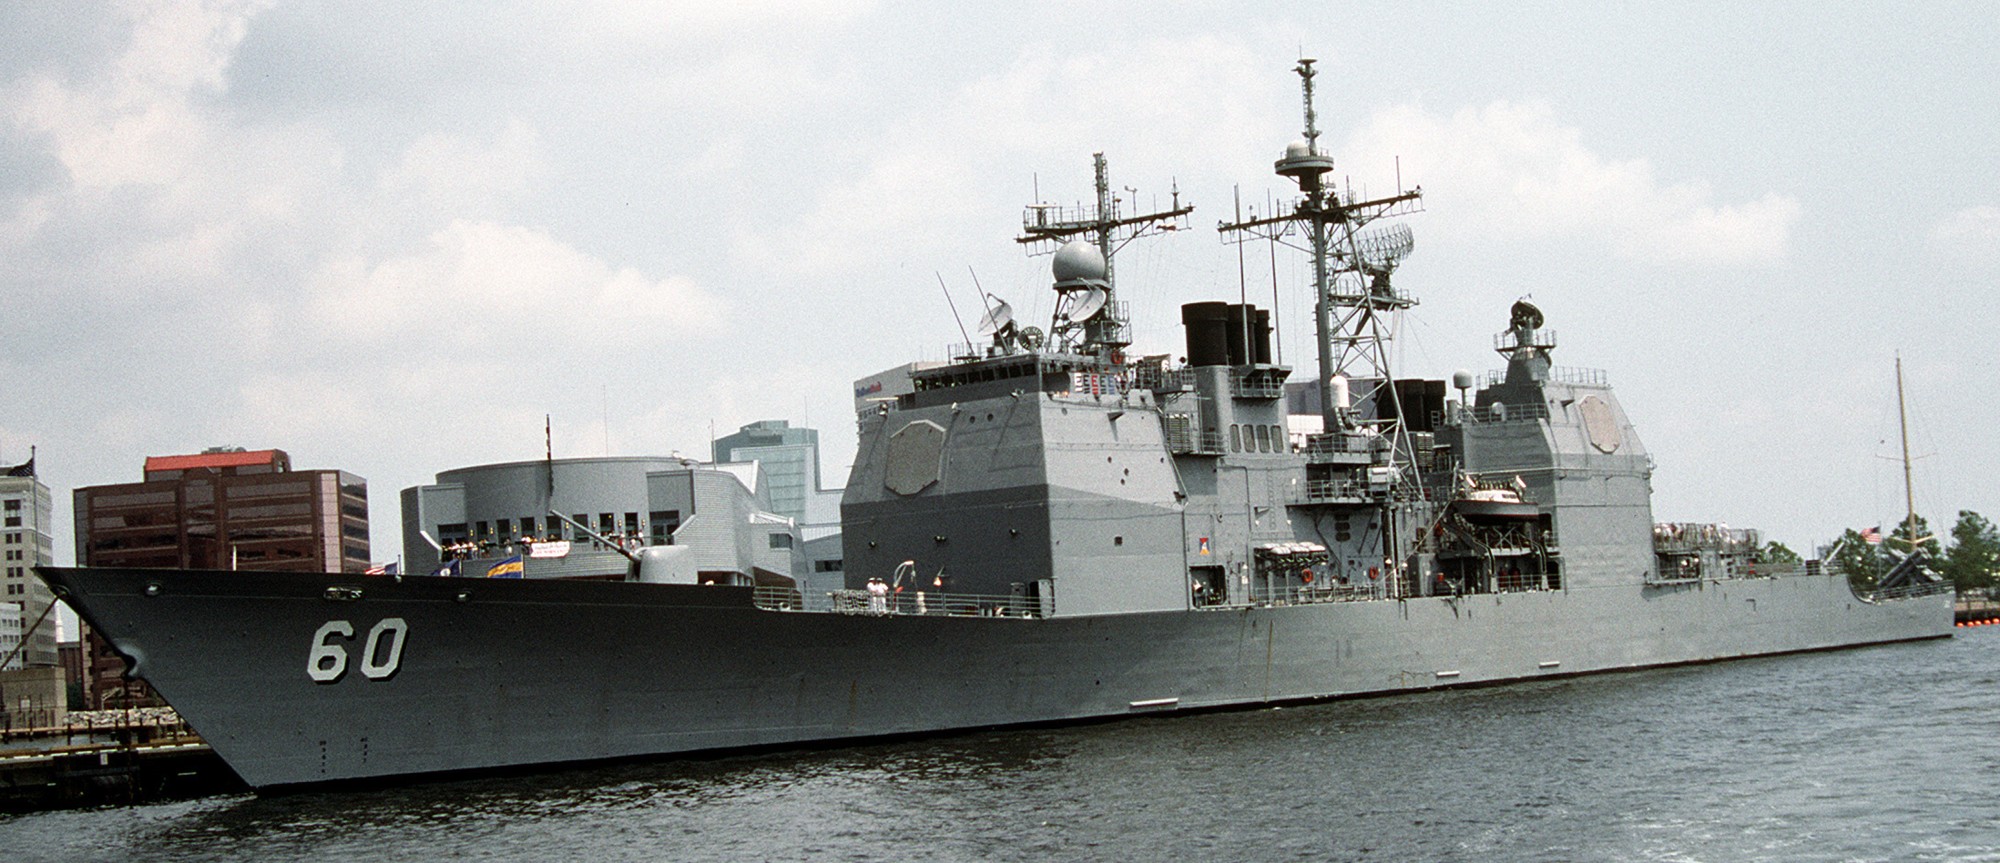 cg-60 uss normandy ticonderoga class guided missile cruiser aegis us navy 135